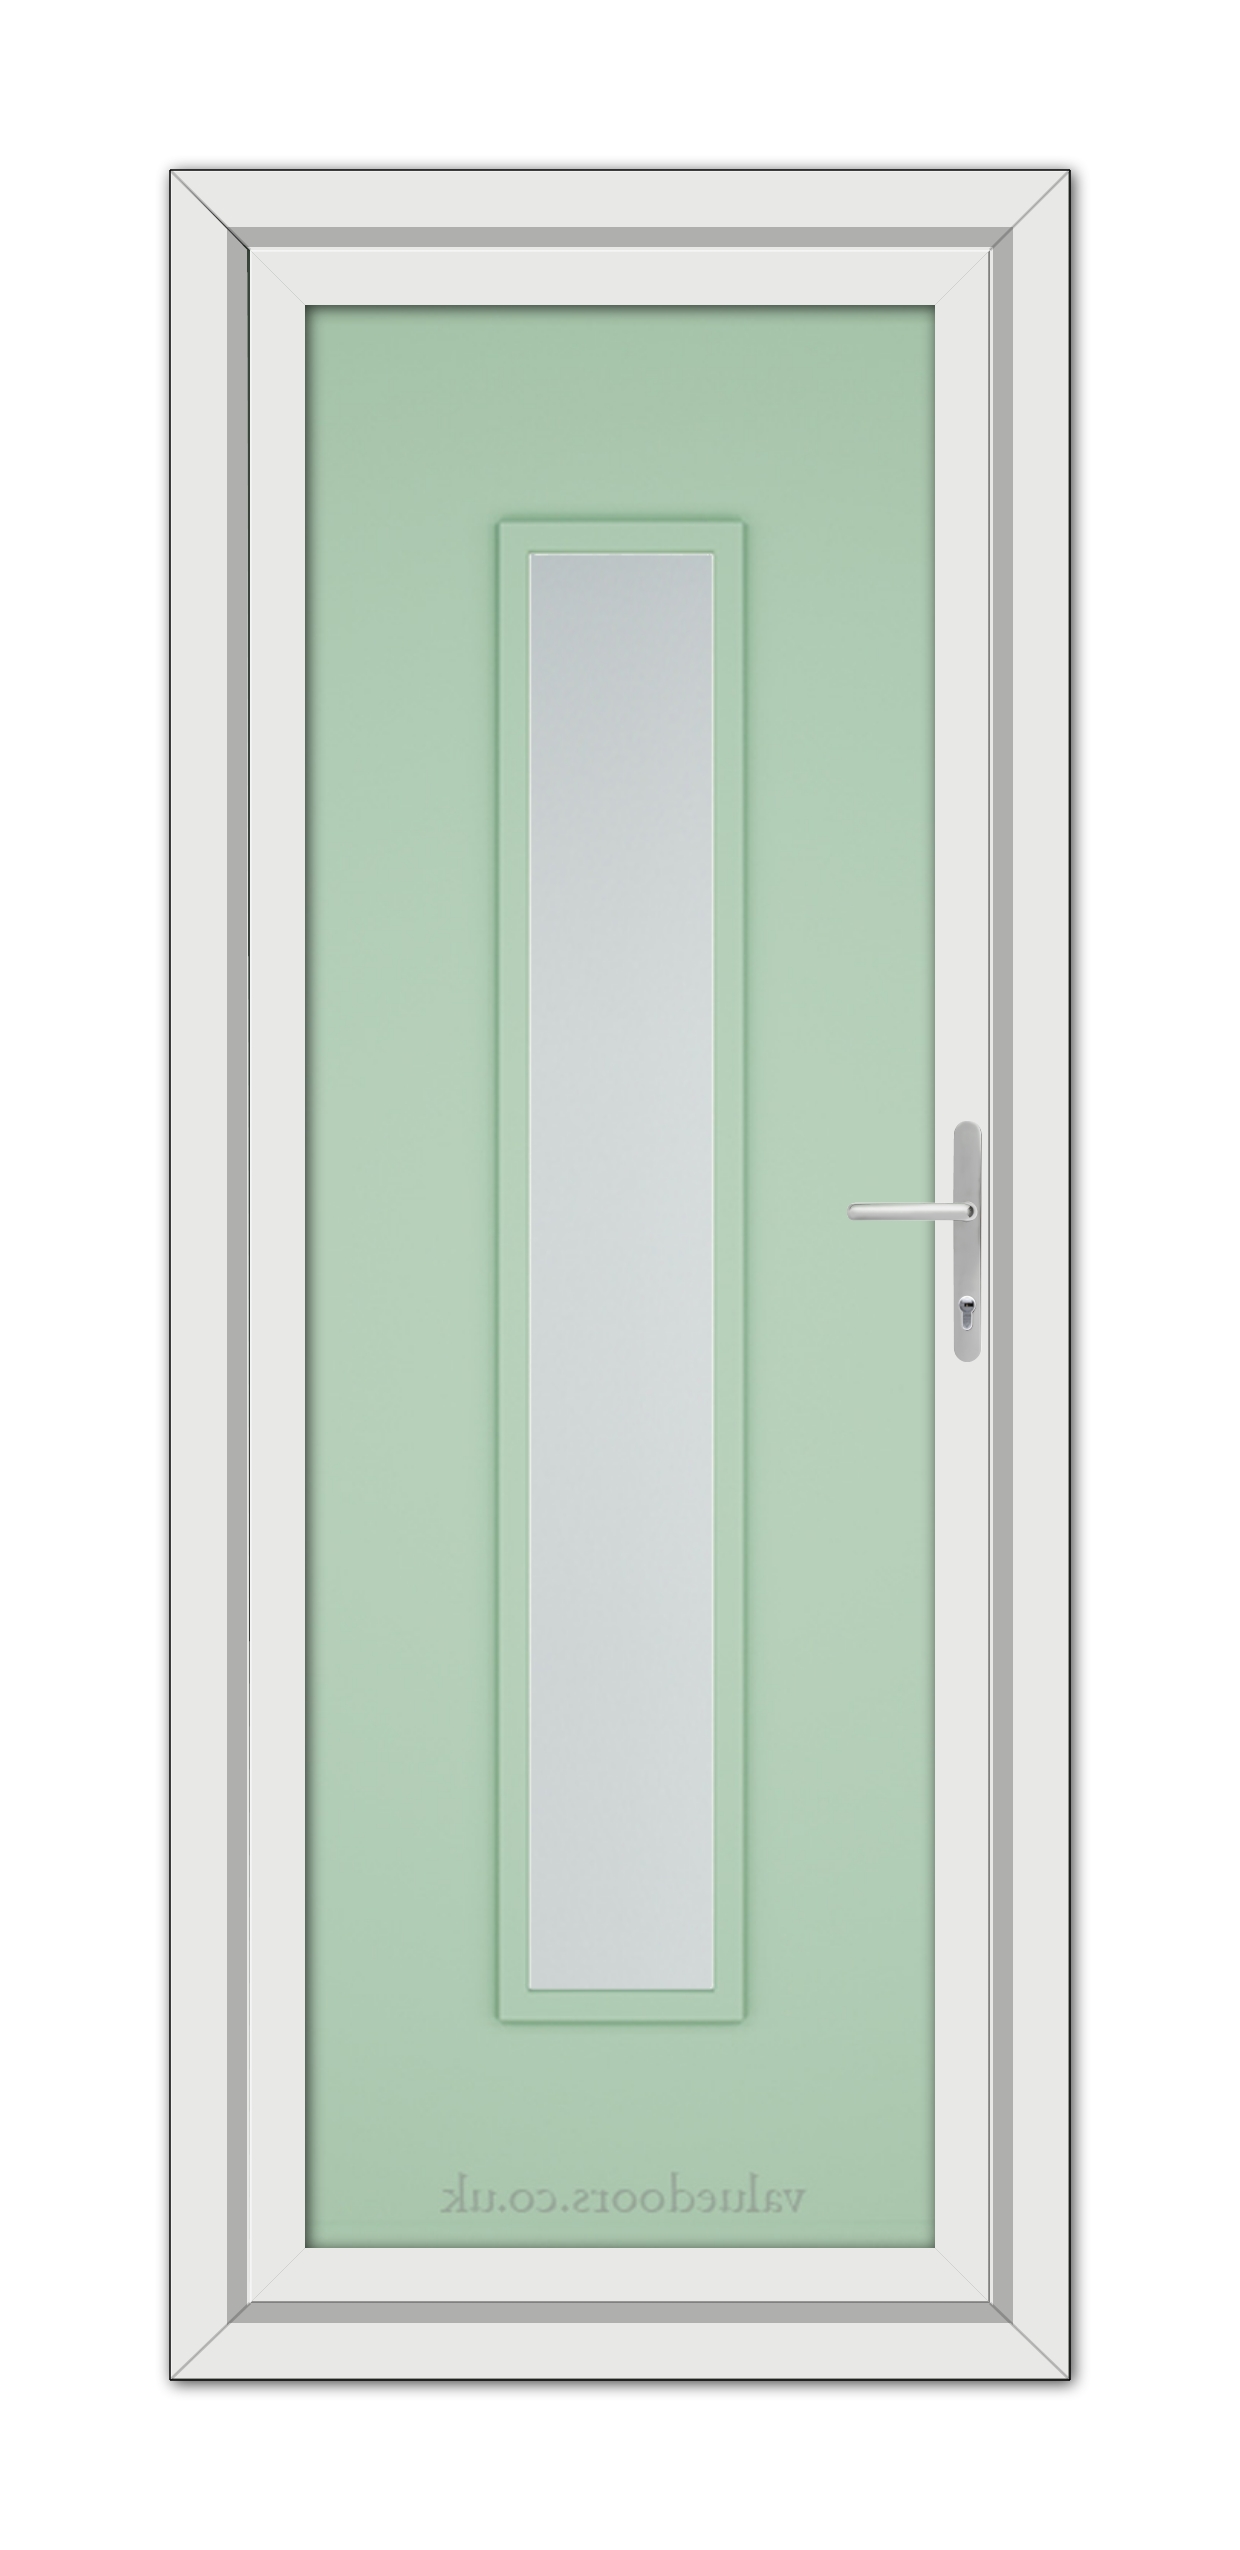 A Chartwell Green Modern 5101 uPVC Door with a glass panel.